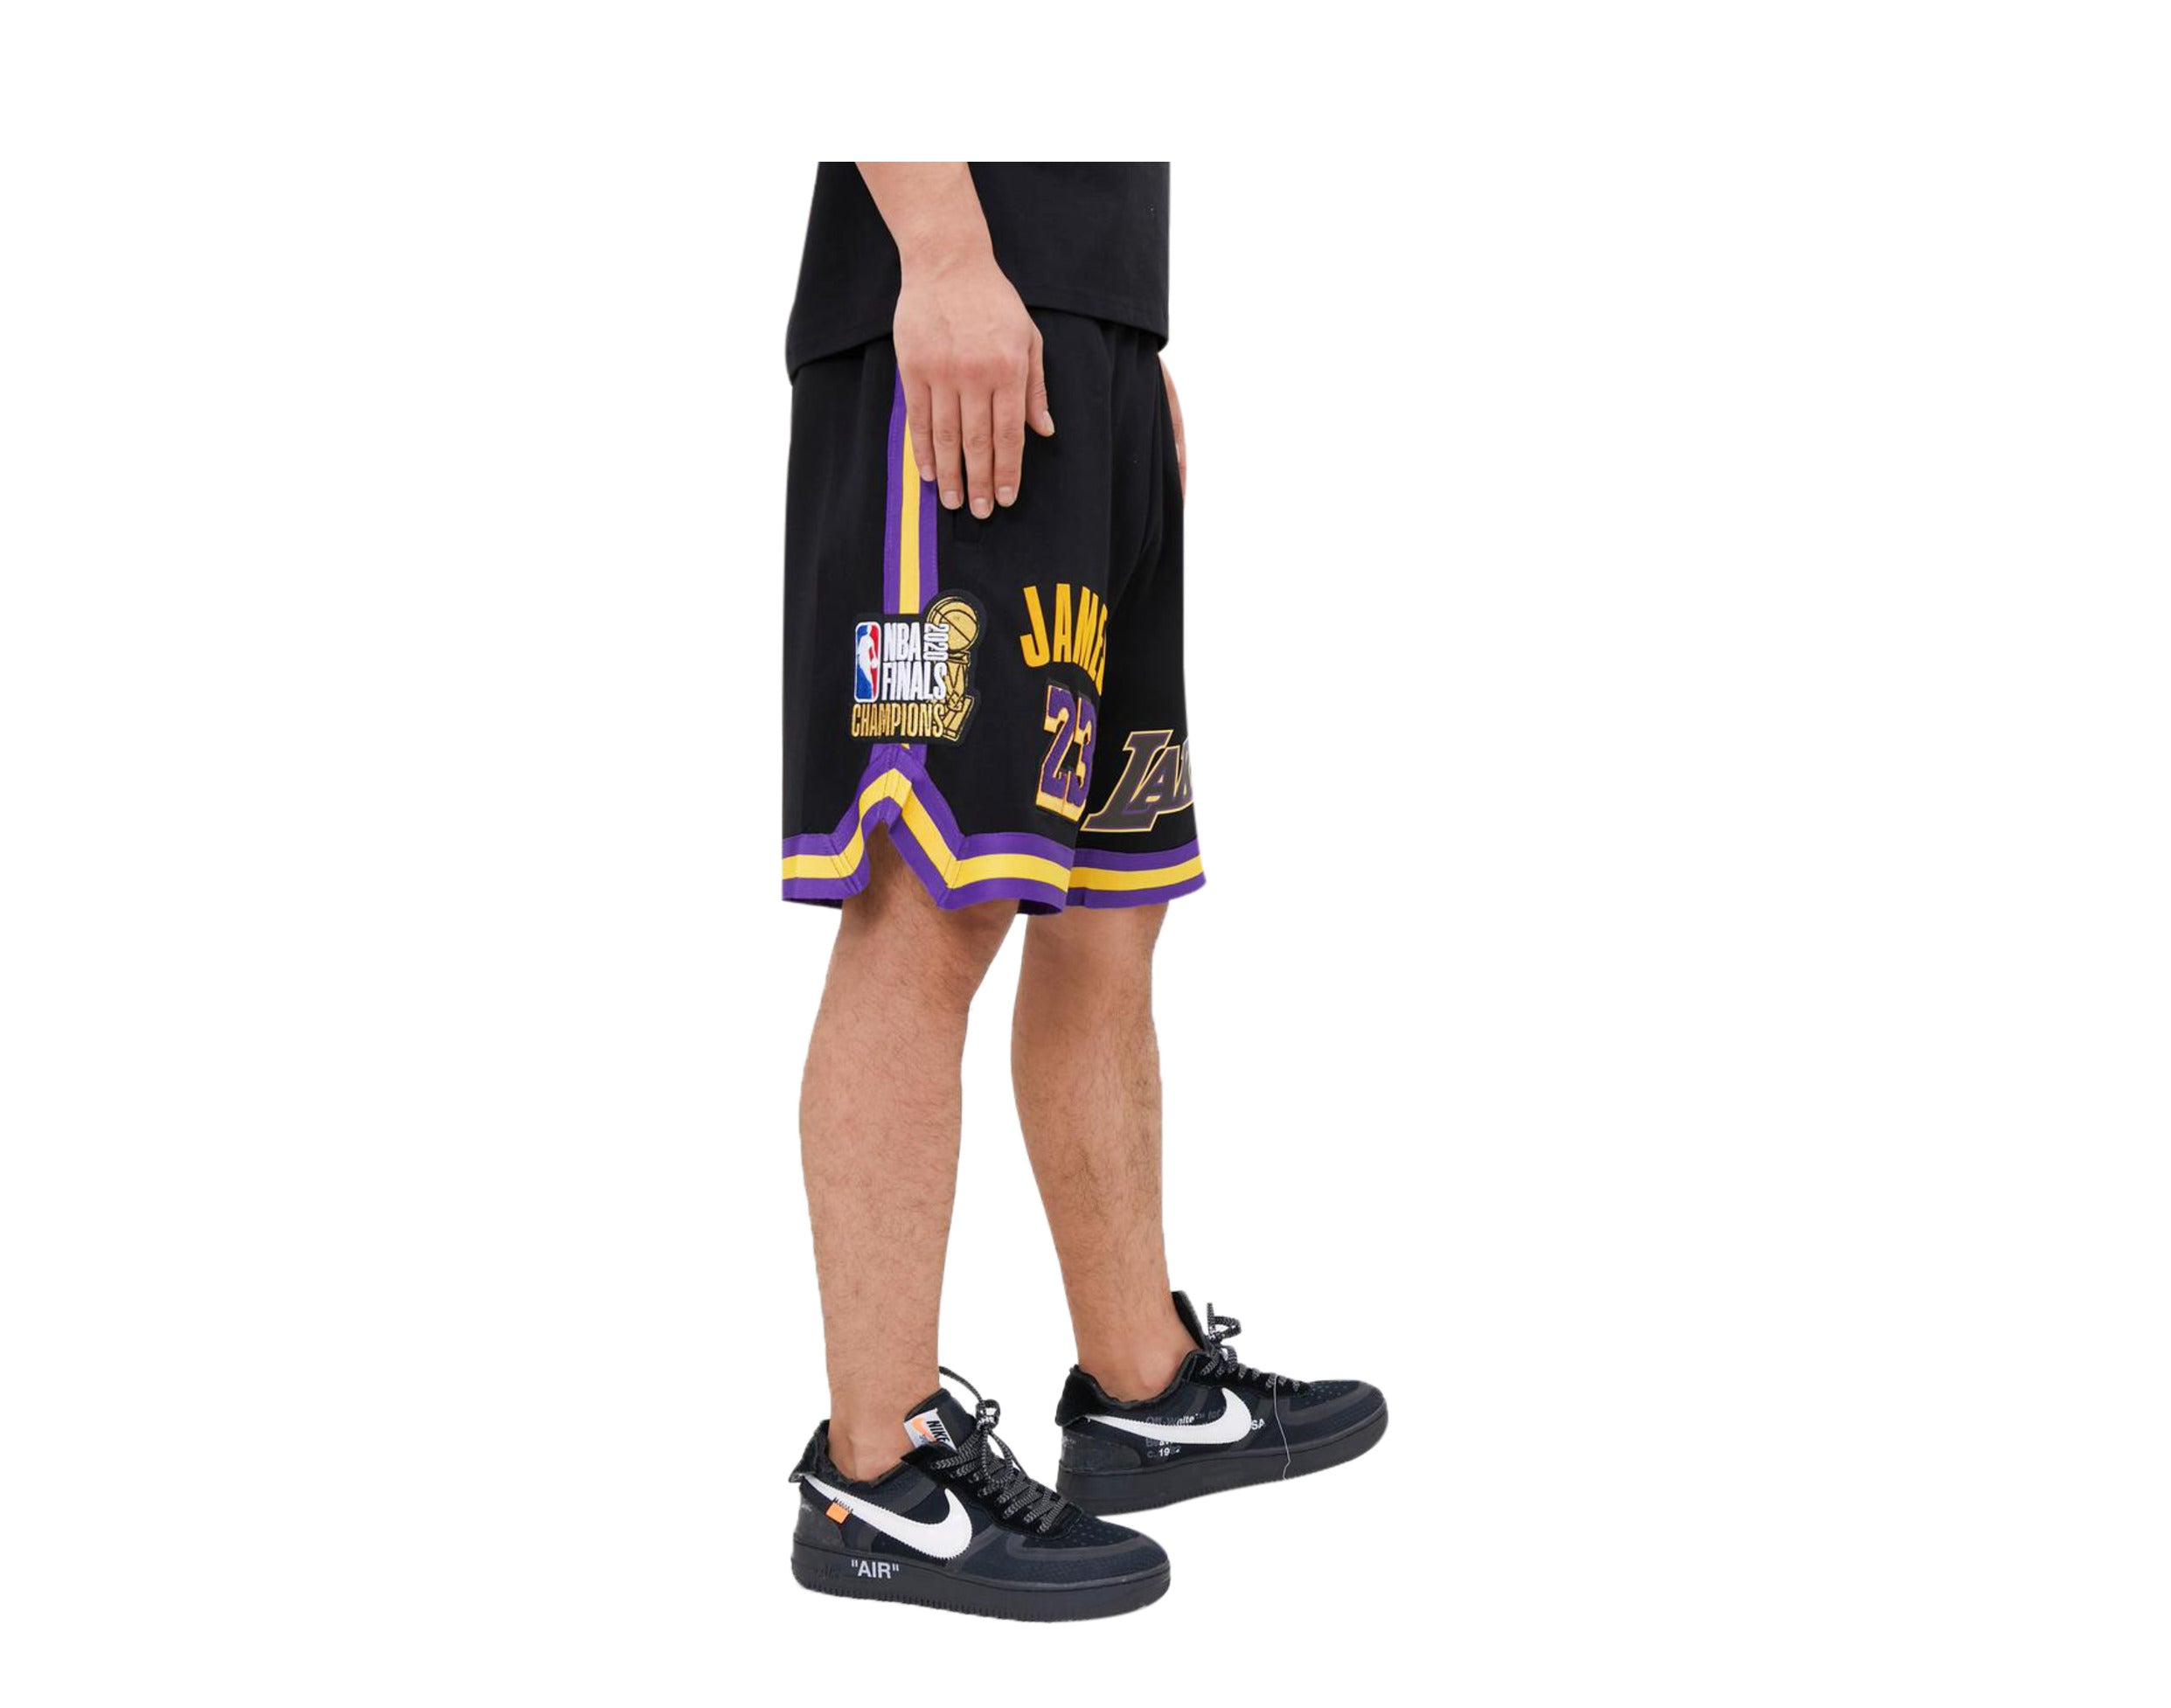 Pro Standard Nba Los Angeles Lakers Pro Team Shorts